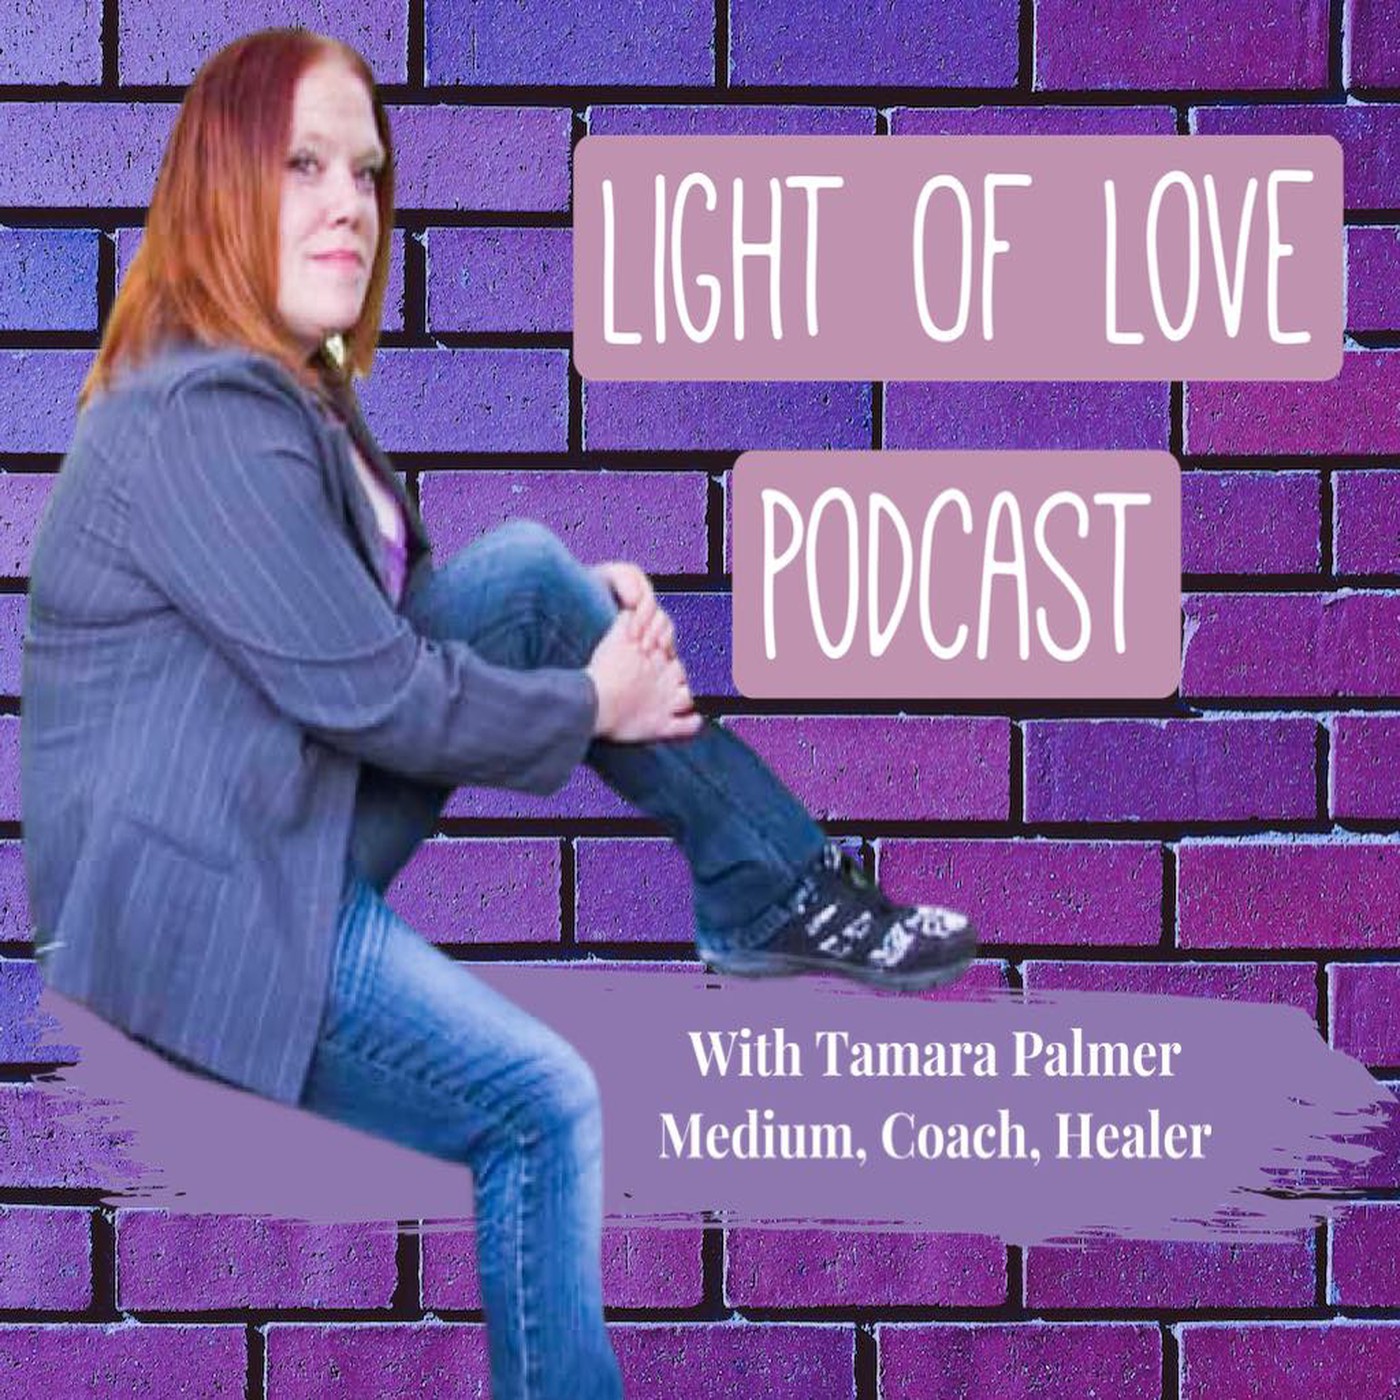 Light Of Love Podcast with Tamara Palmer Medium, Coach, Healer